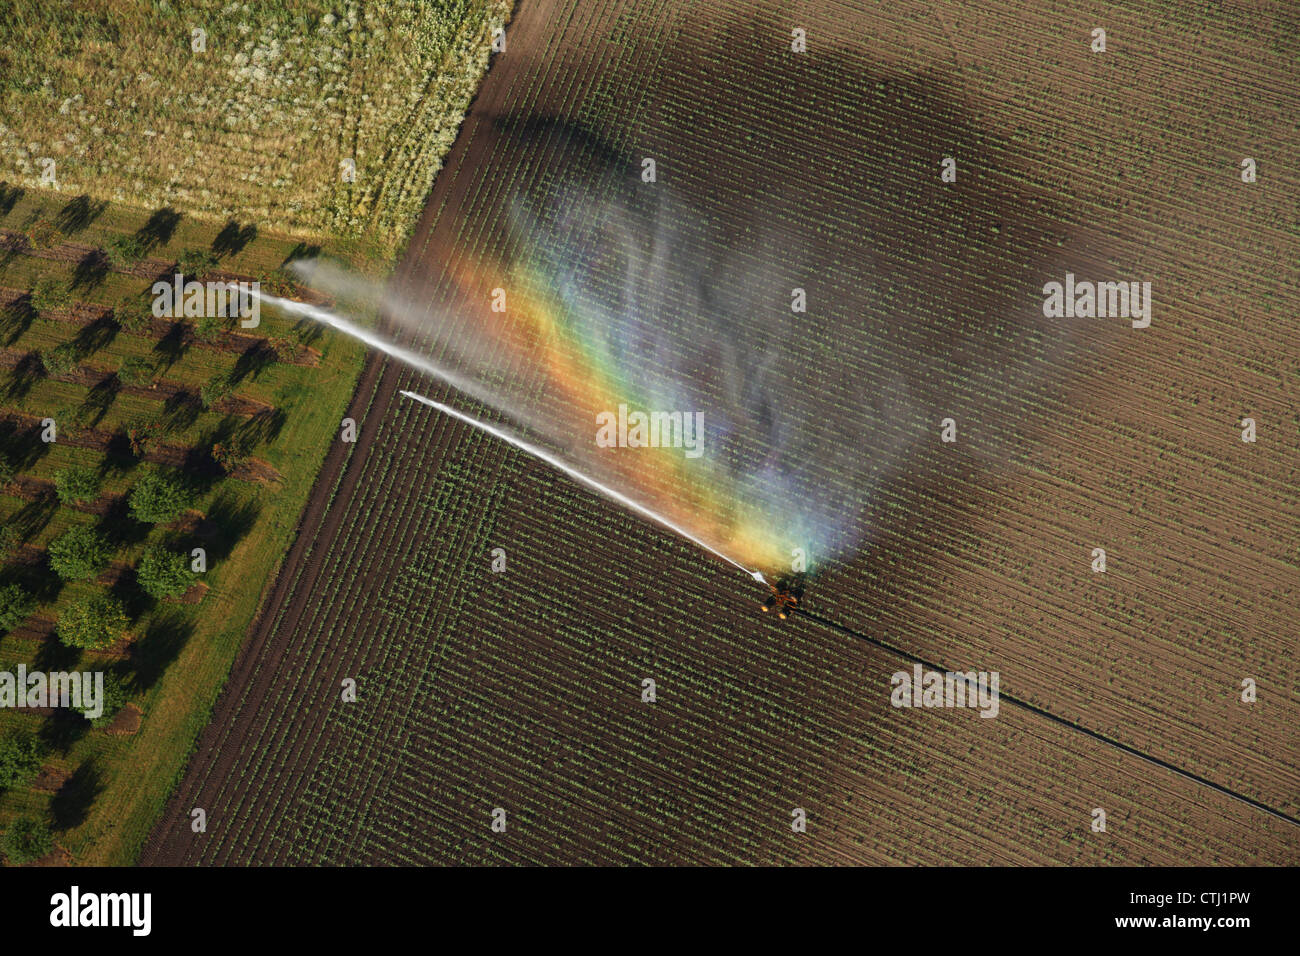 Aerial view of rainbow in irrigation sprinkler Stock Photo